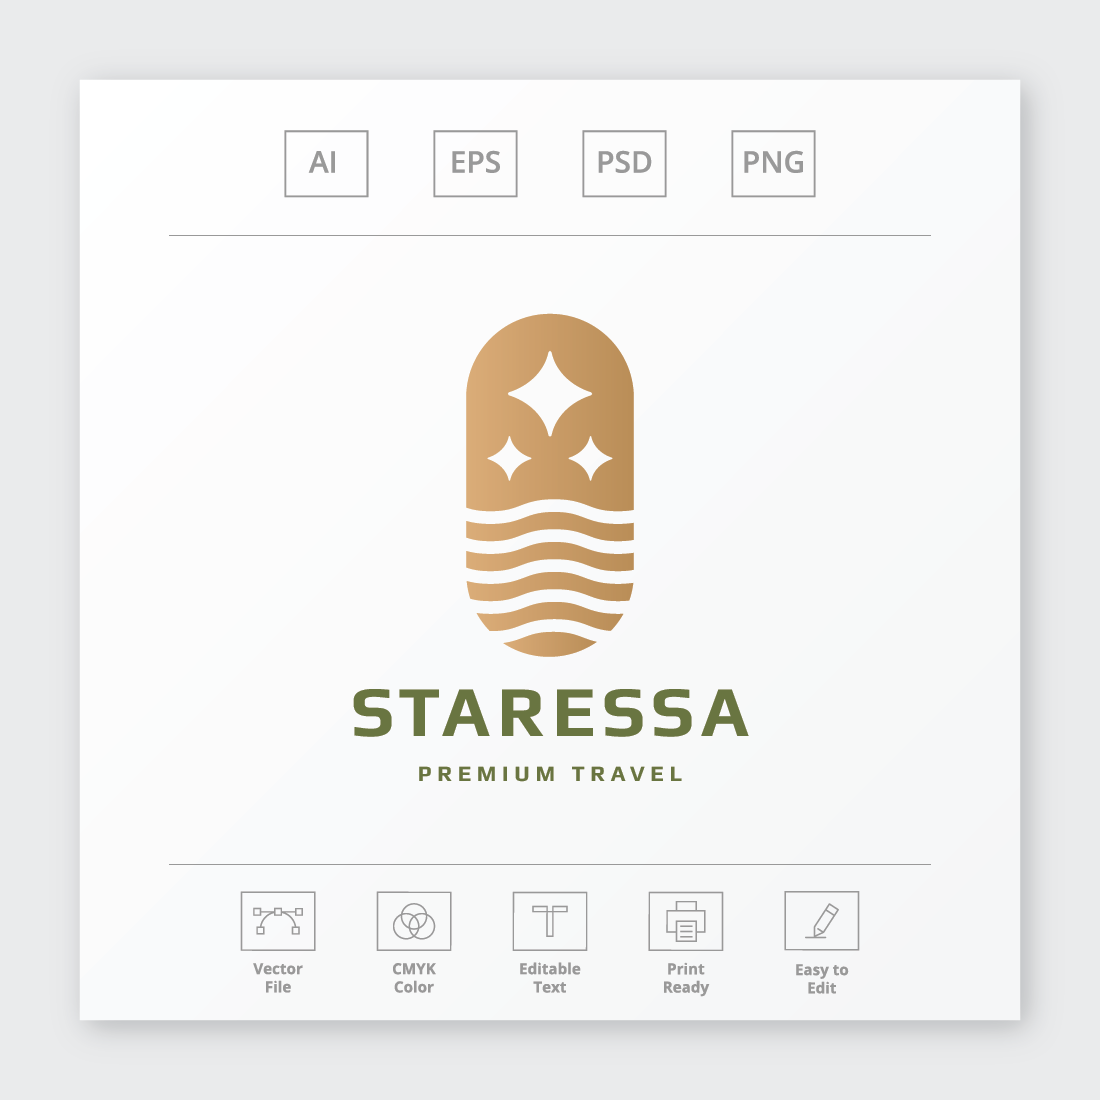 Star Travel Agent Logo cover image.